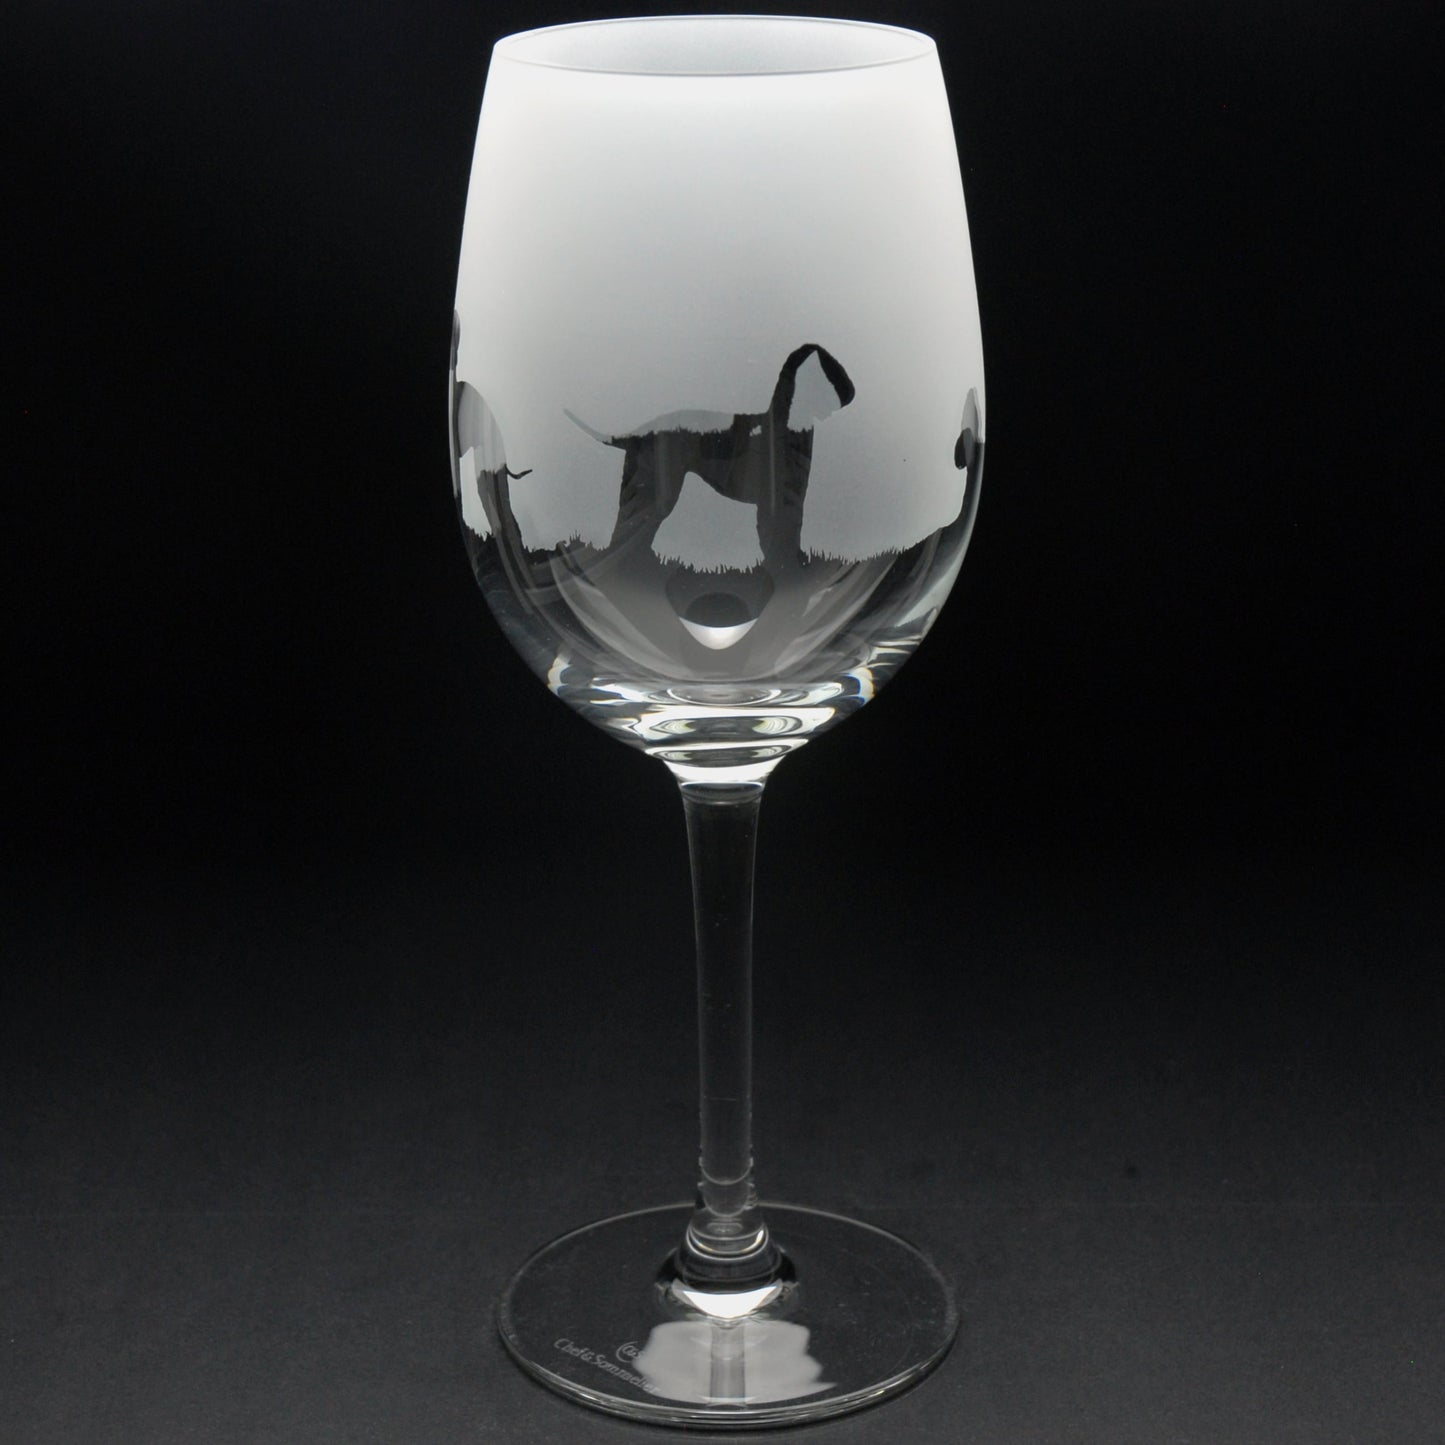 Bedlington Terrier Dog Crystal Wine Glass - Hand Etched/Engraved Gift